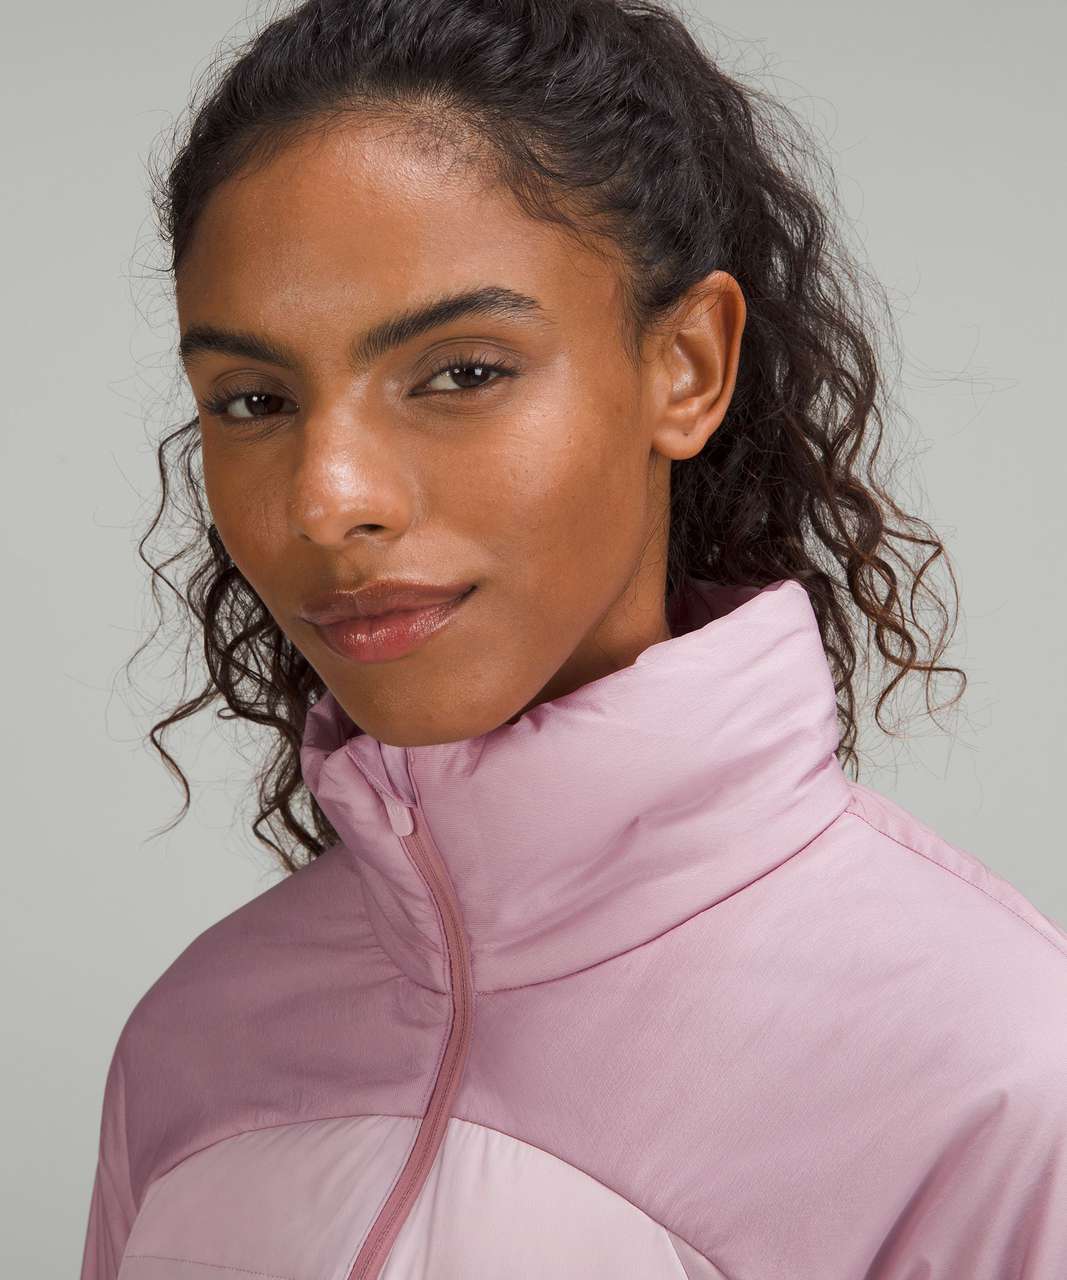 Lululemon Down For It All Jacket Full Zip Hood Size 8 Pink Mist